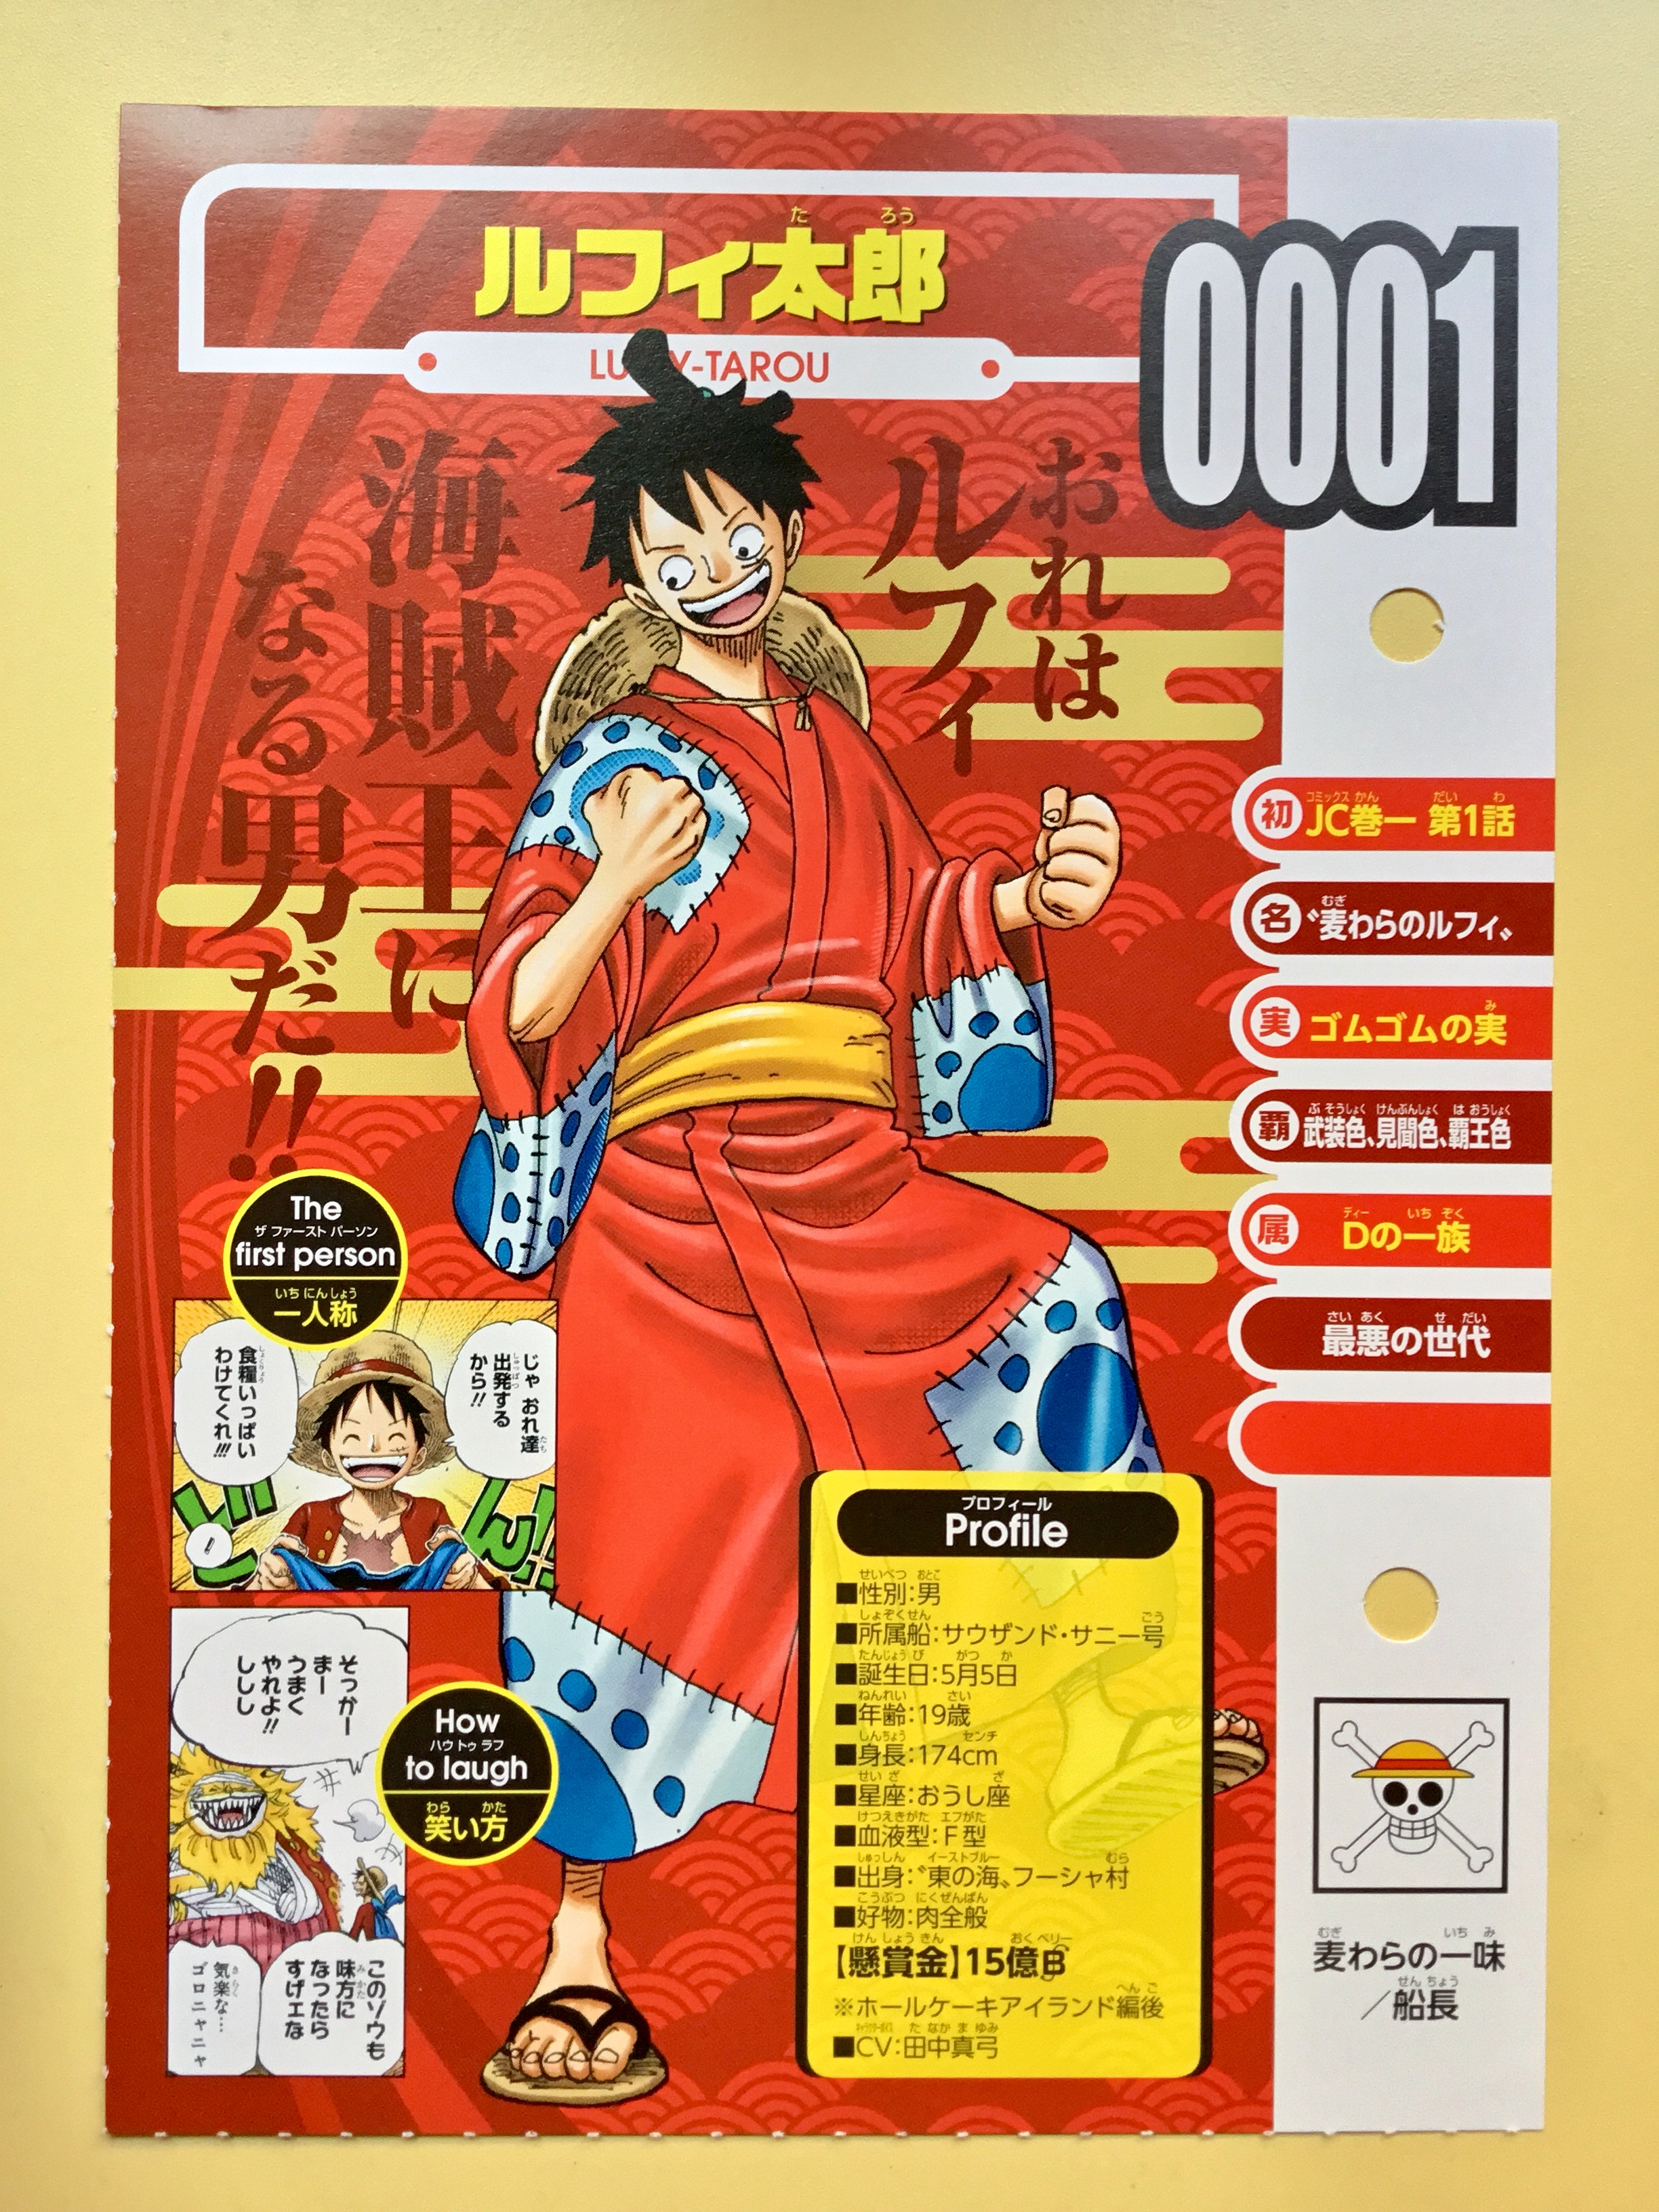 Vivre Card One Piece Visual Dictionary Nuevo Fanbook De La Serie 4 De Septiembre 18 Pagina 53 Foro De One Piece Pirateking